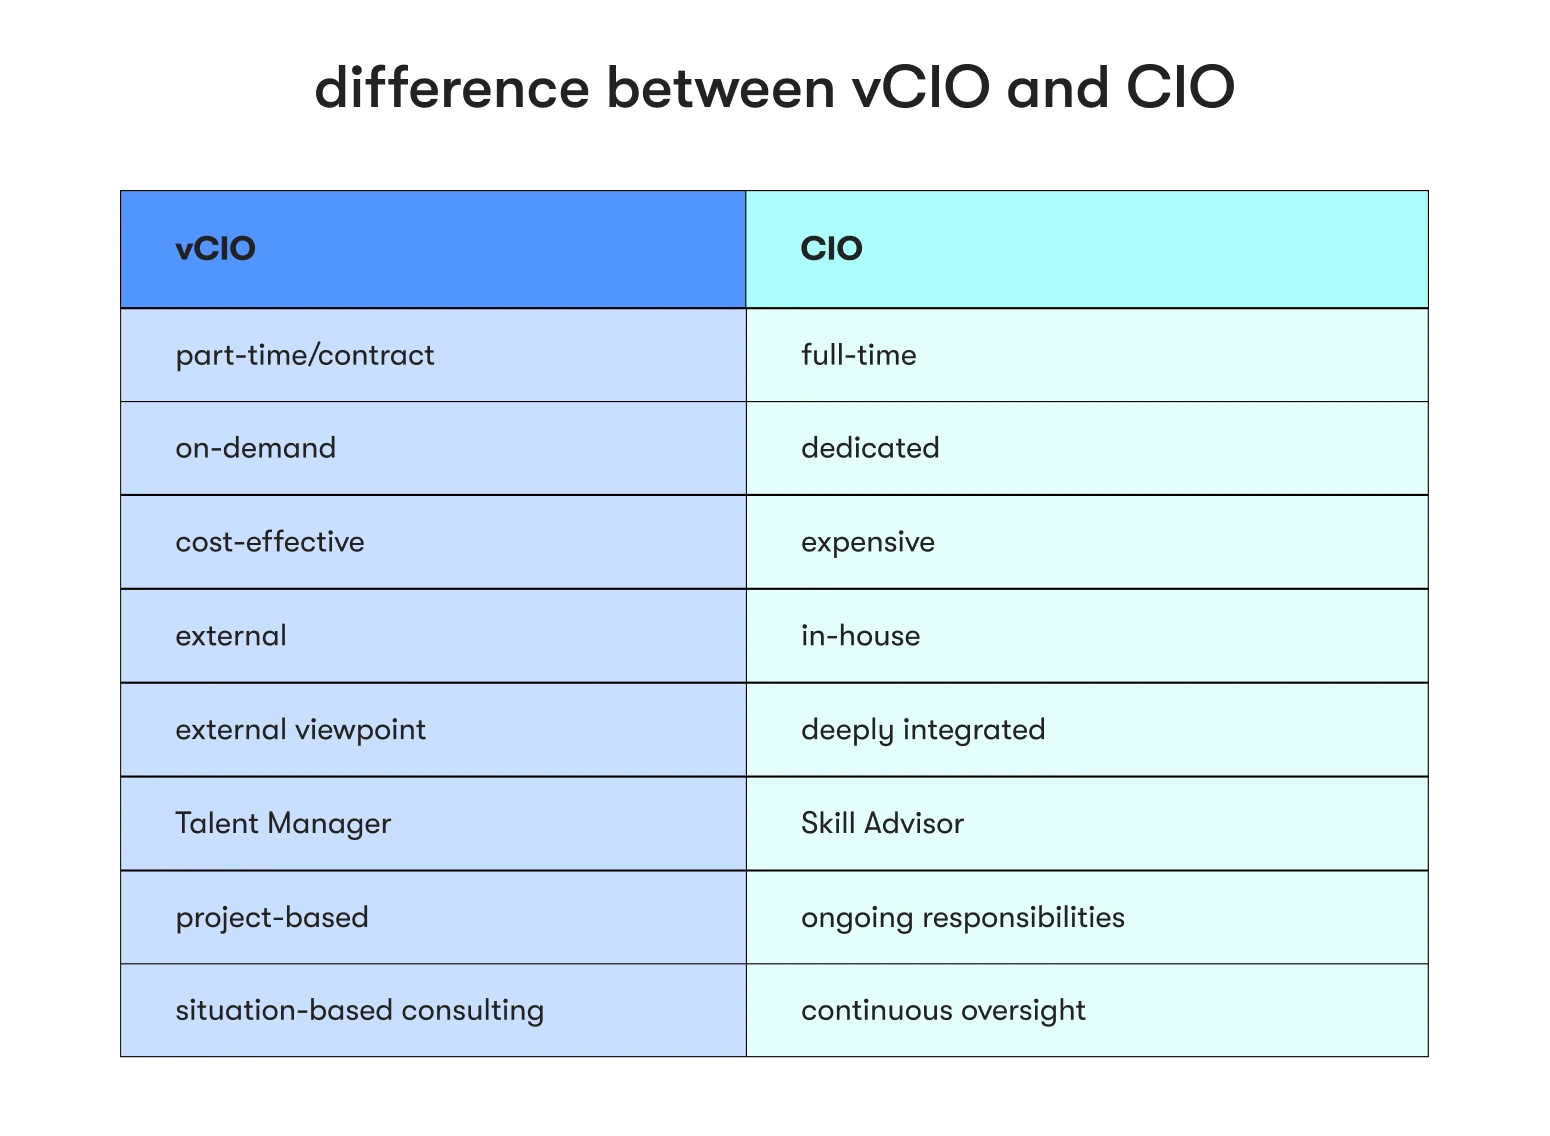 difference between vCIO and CIO